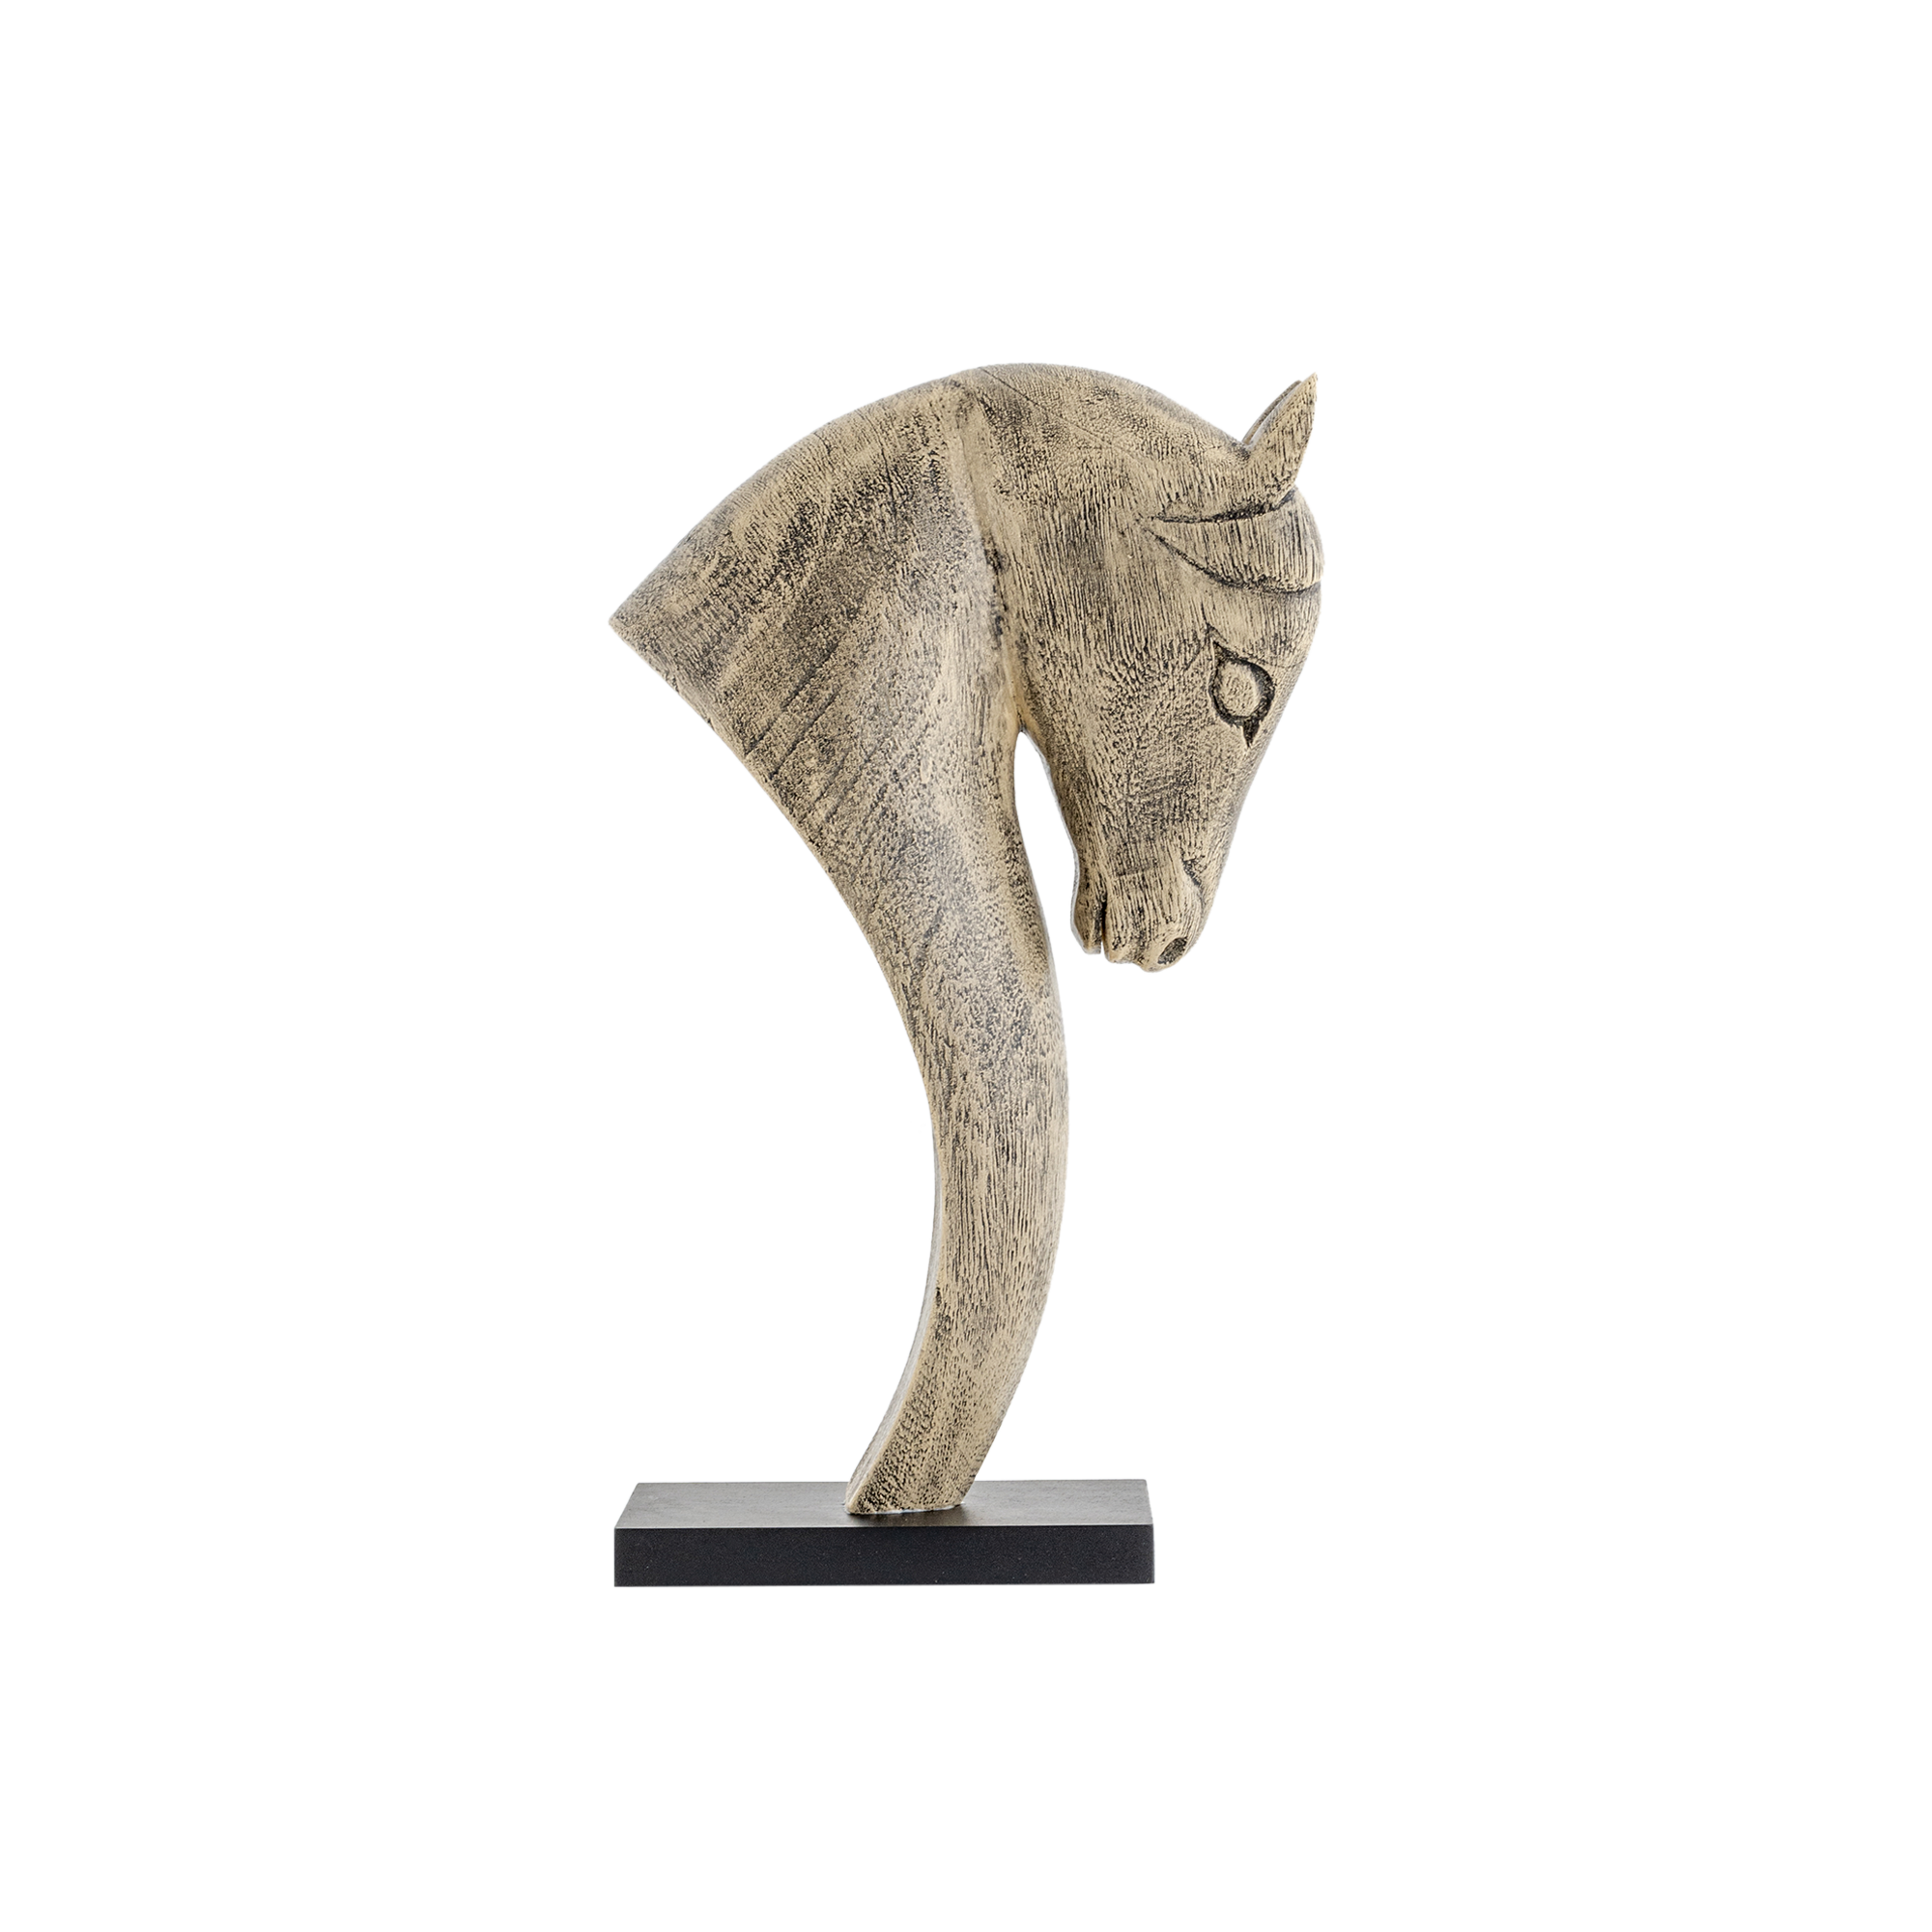 Horse Head Sculpture